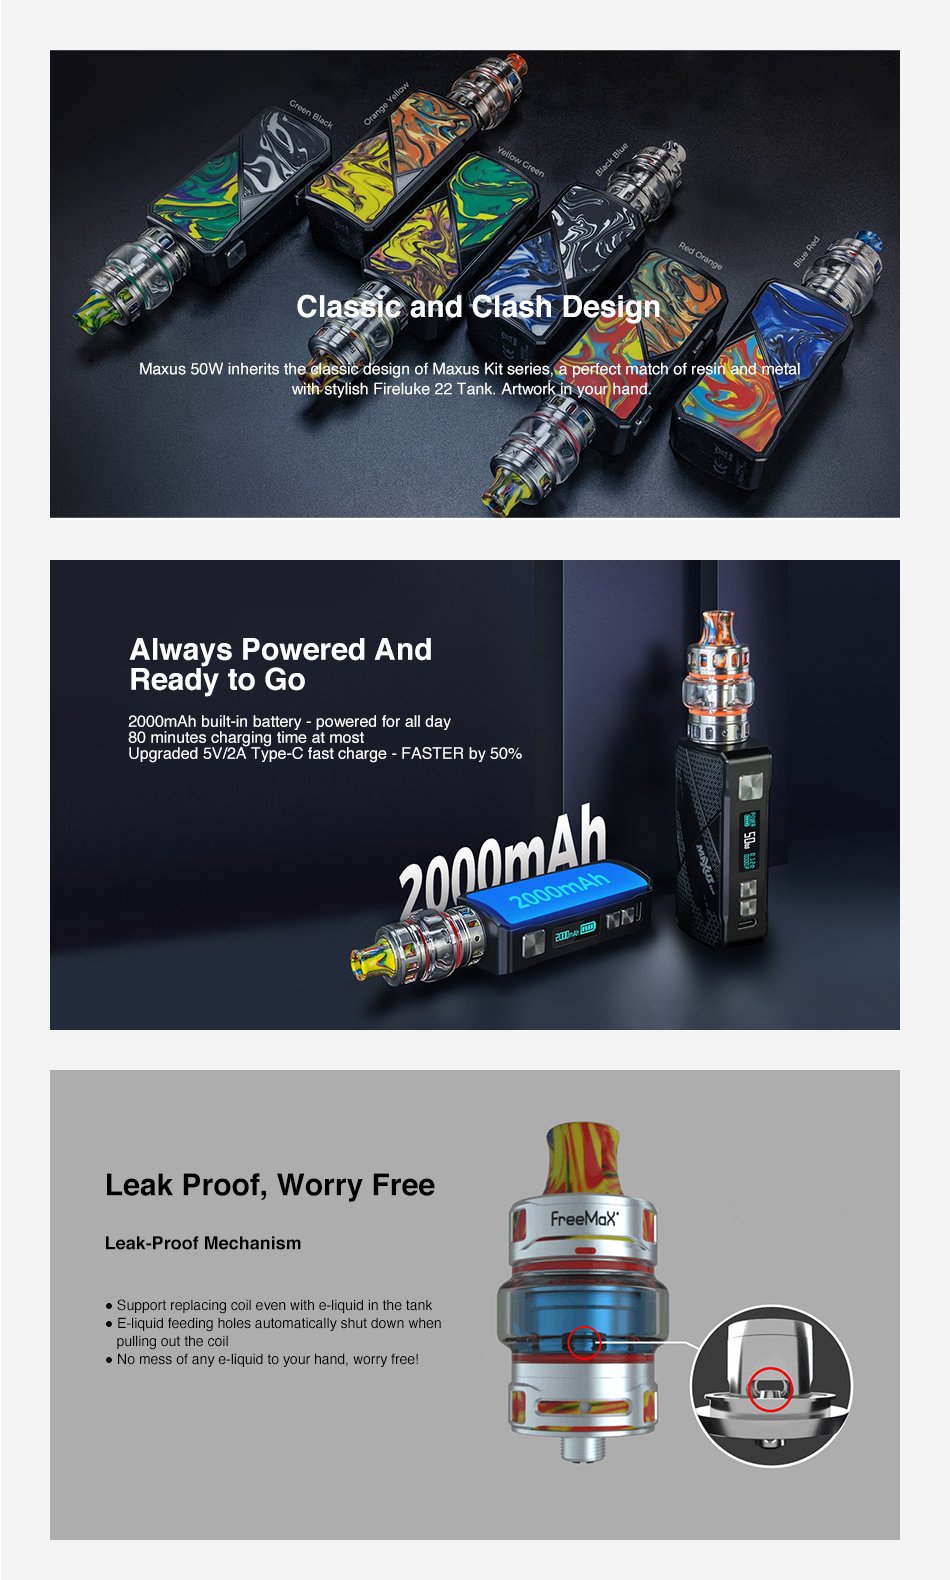 Freemax Maxus Kits 50W Features UK